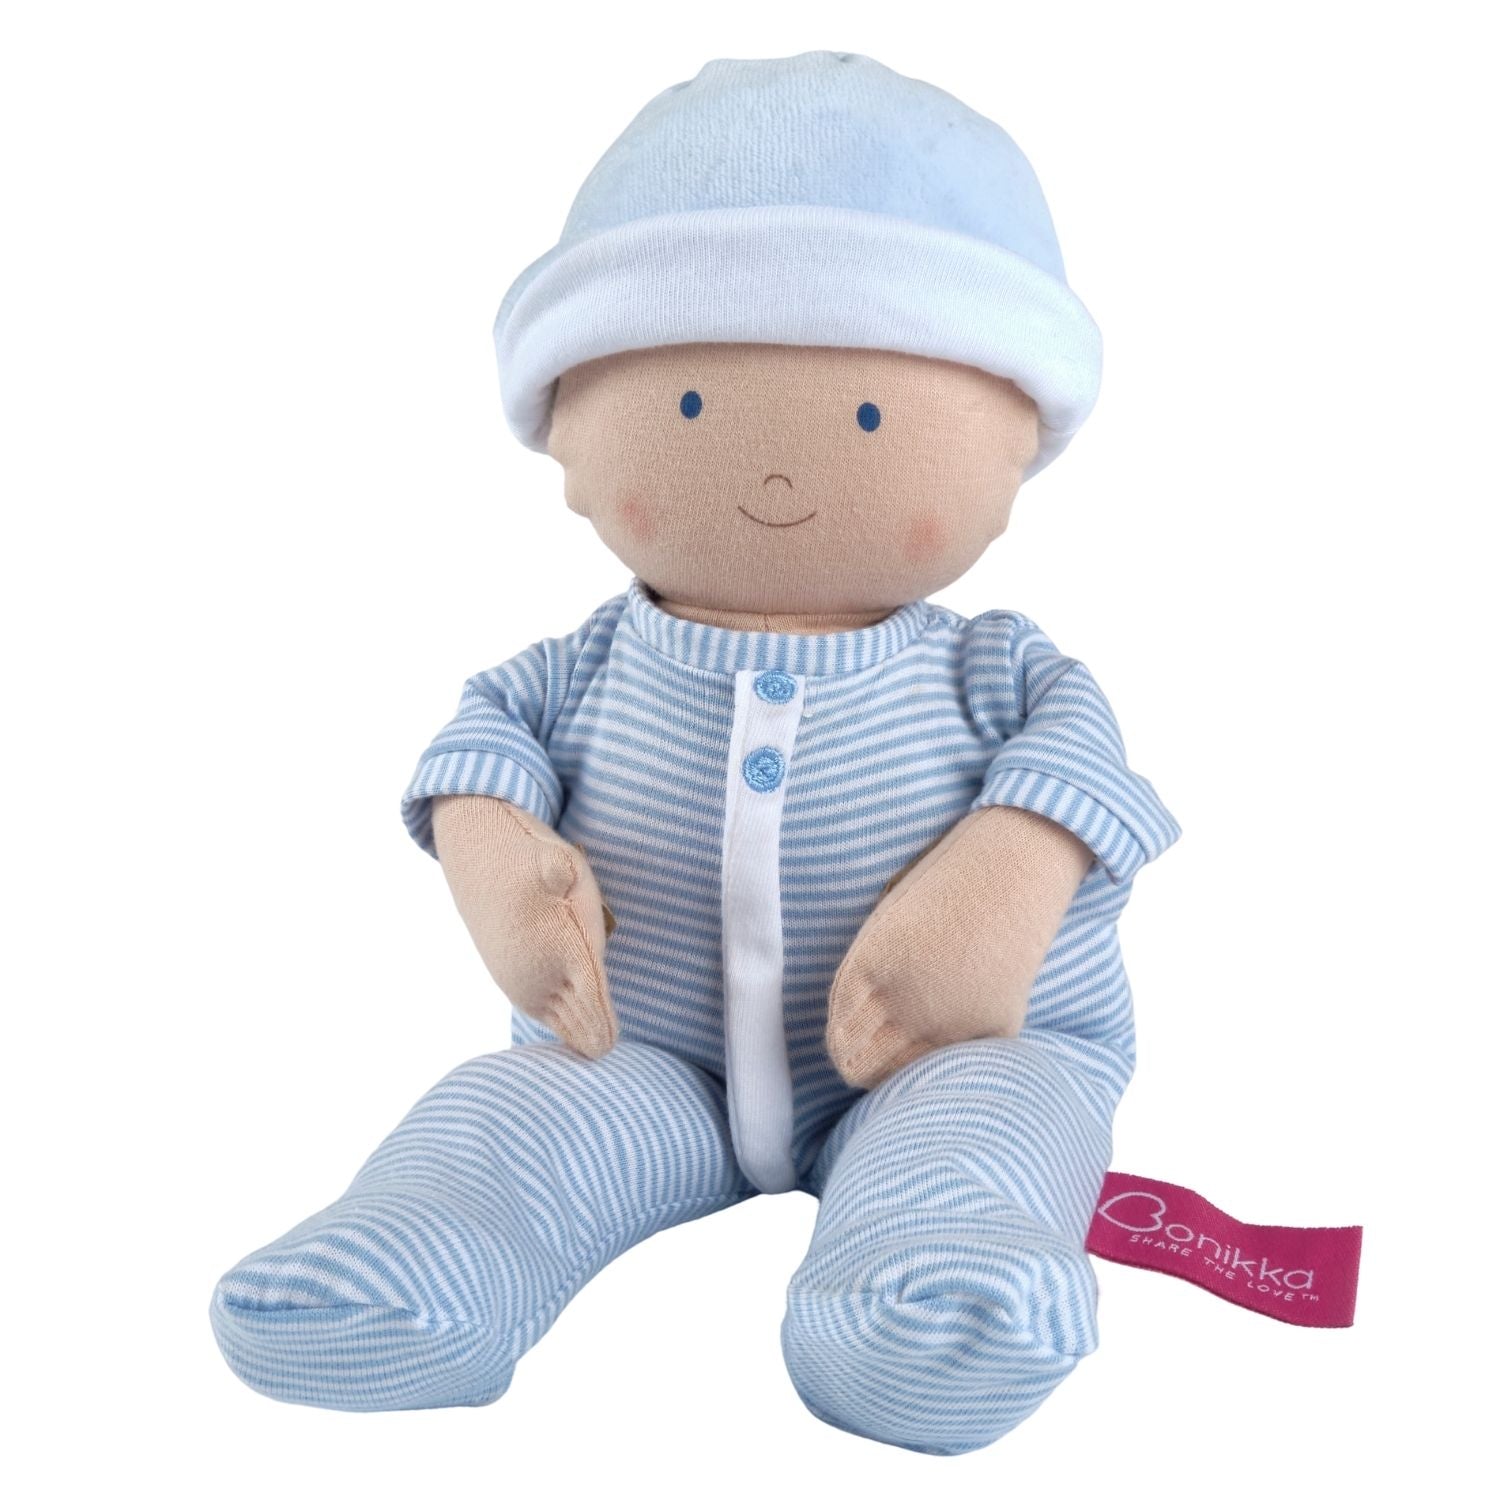 Bonikka Cherub Baby Boy Doll in Blue Outfit